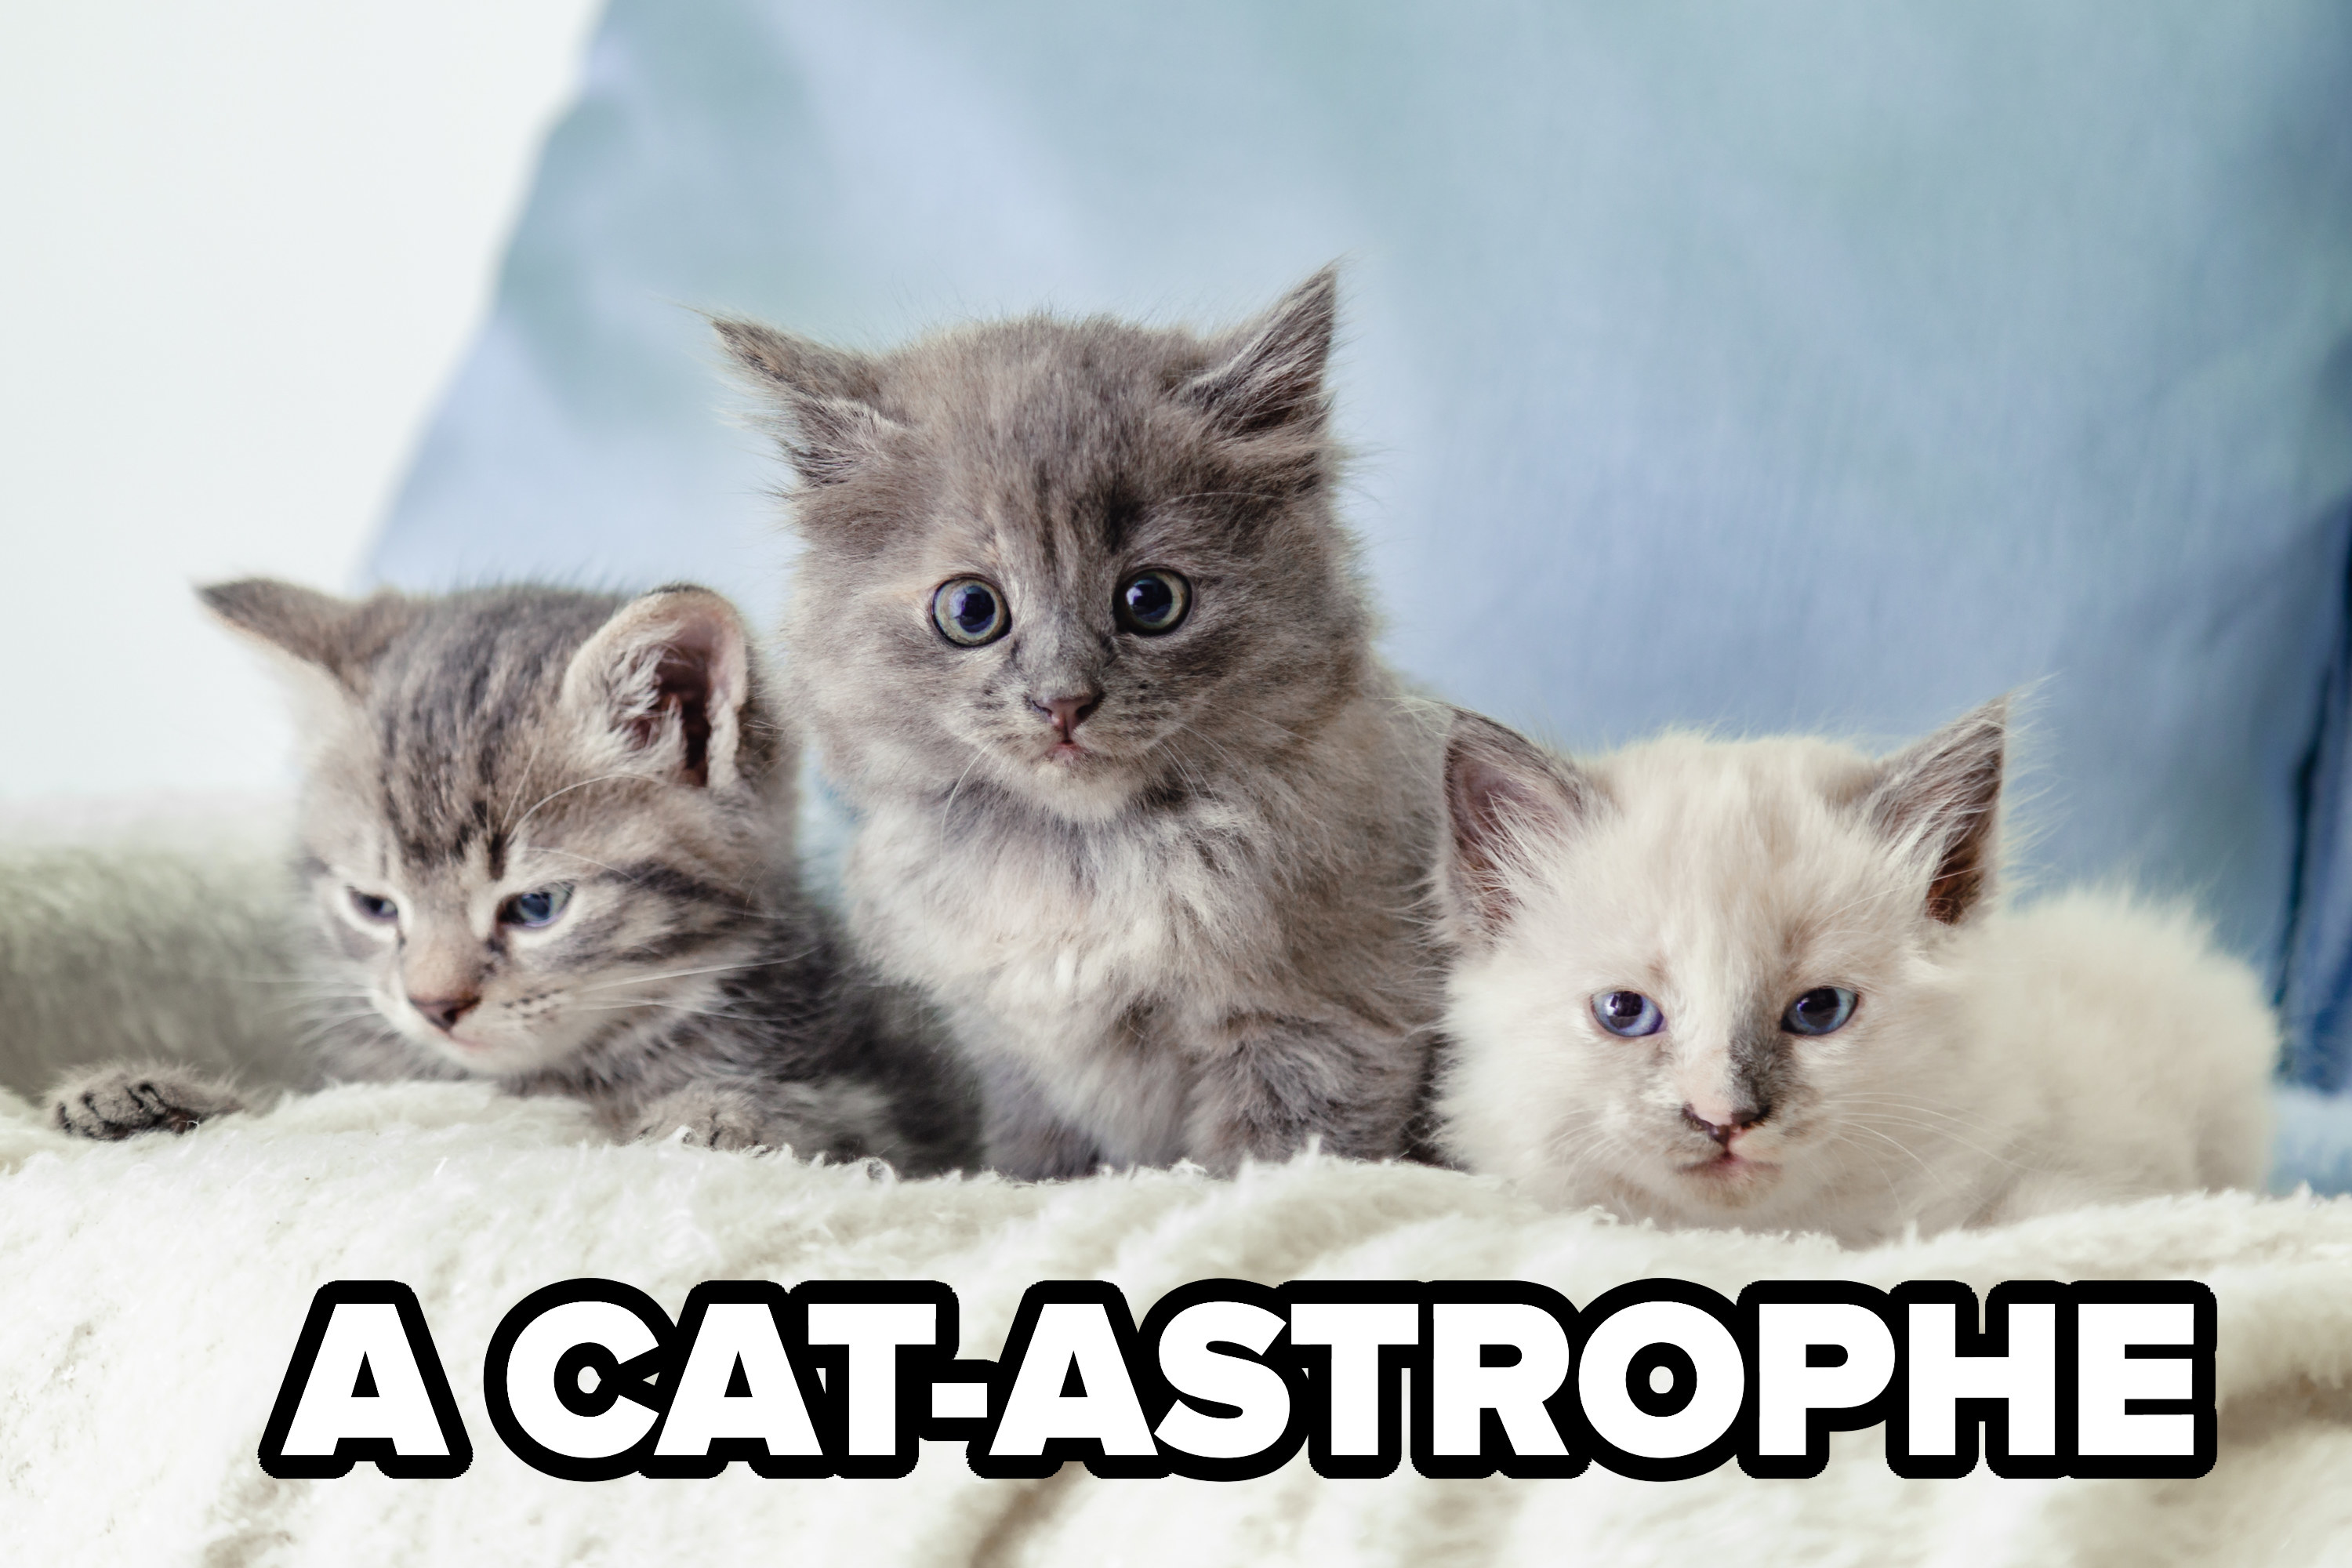 A cat-astrophe